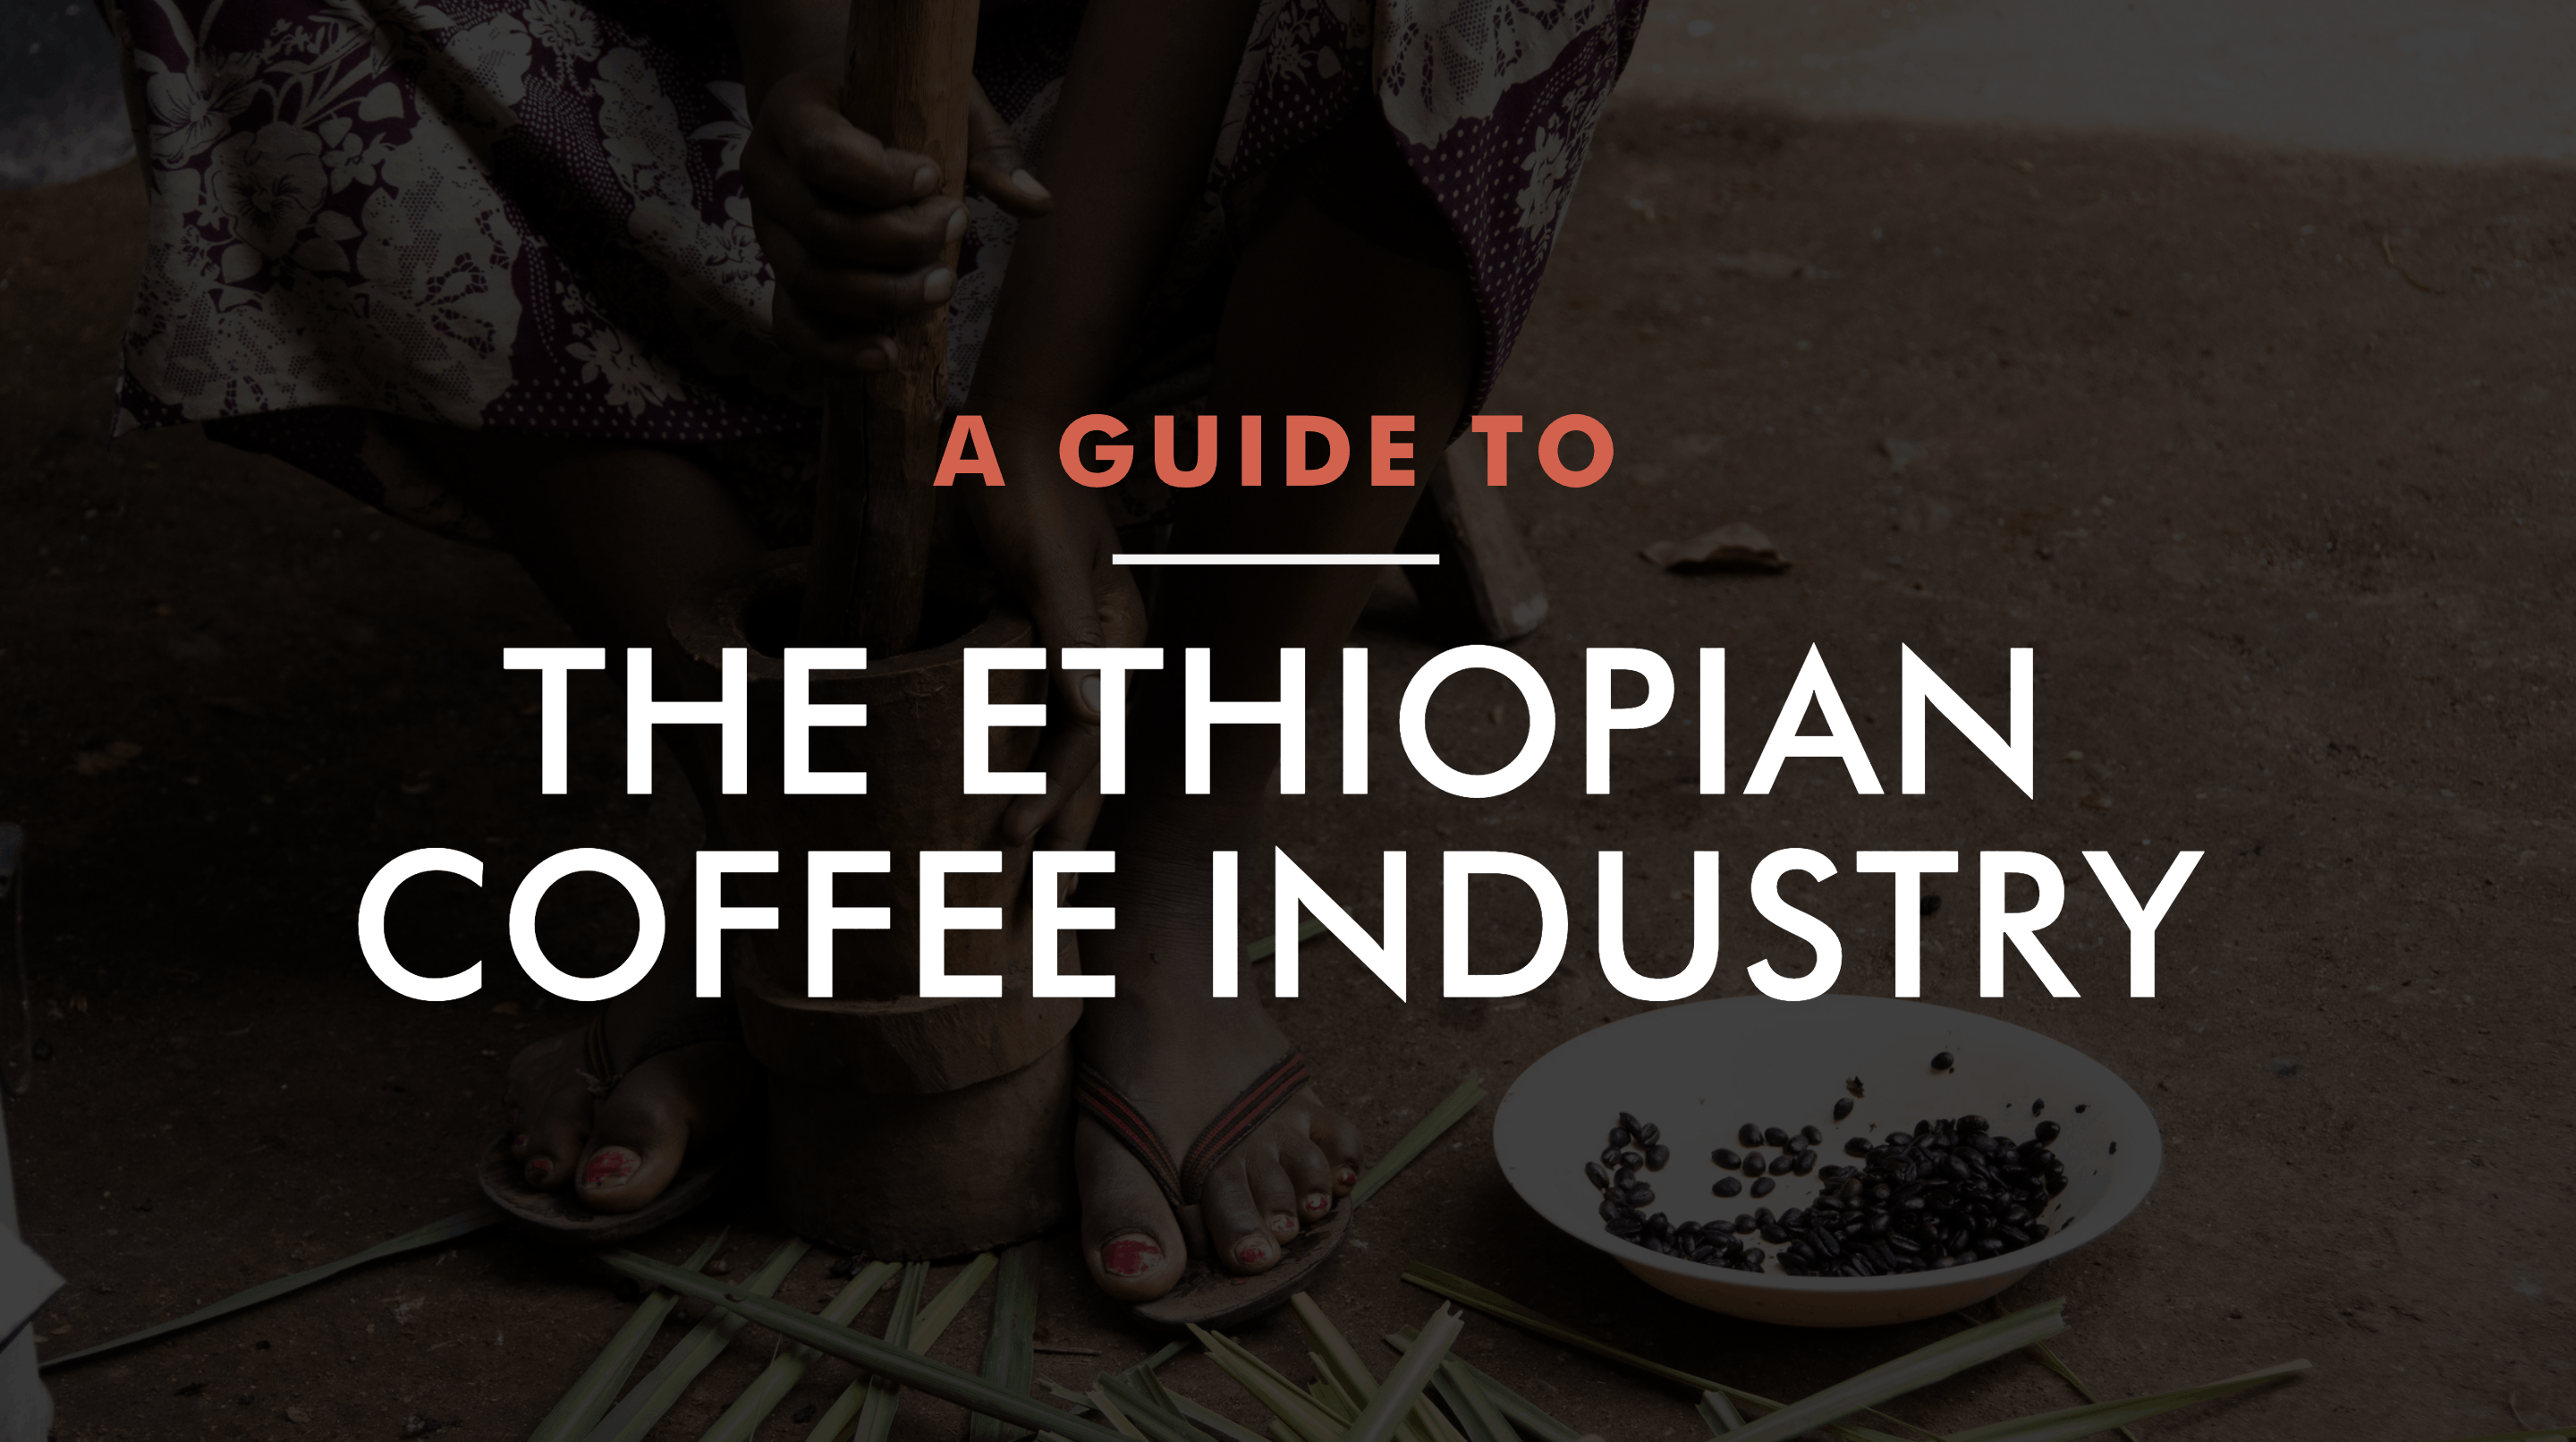 The Ethiopian Coffee Industry